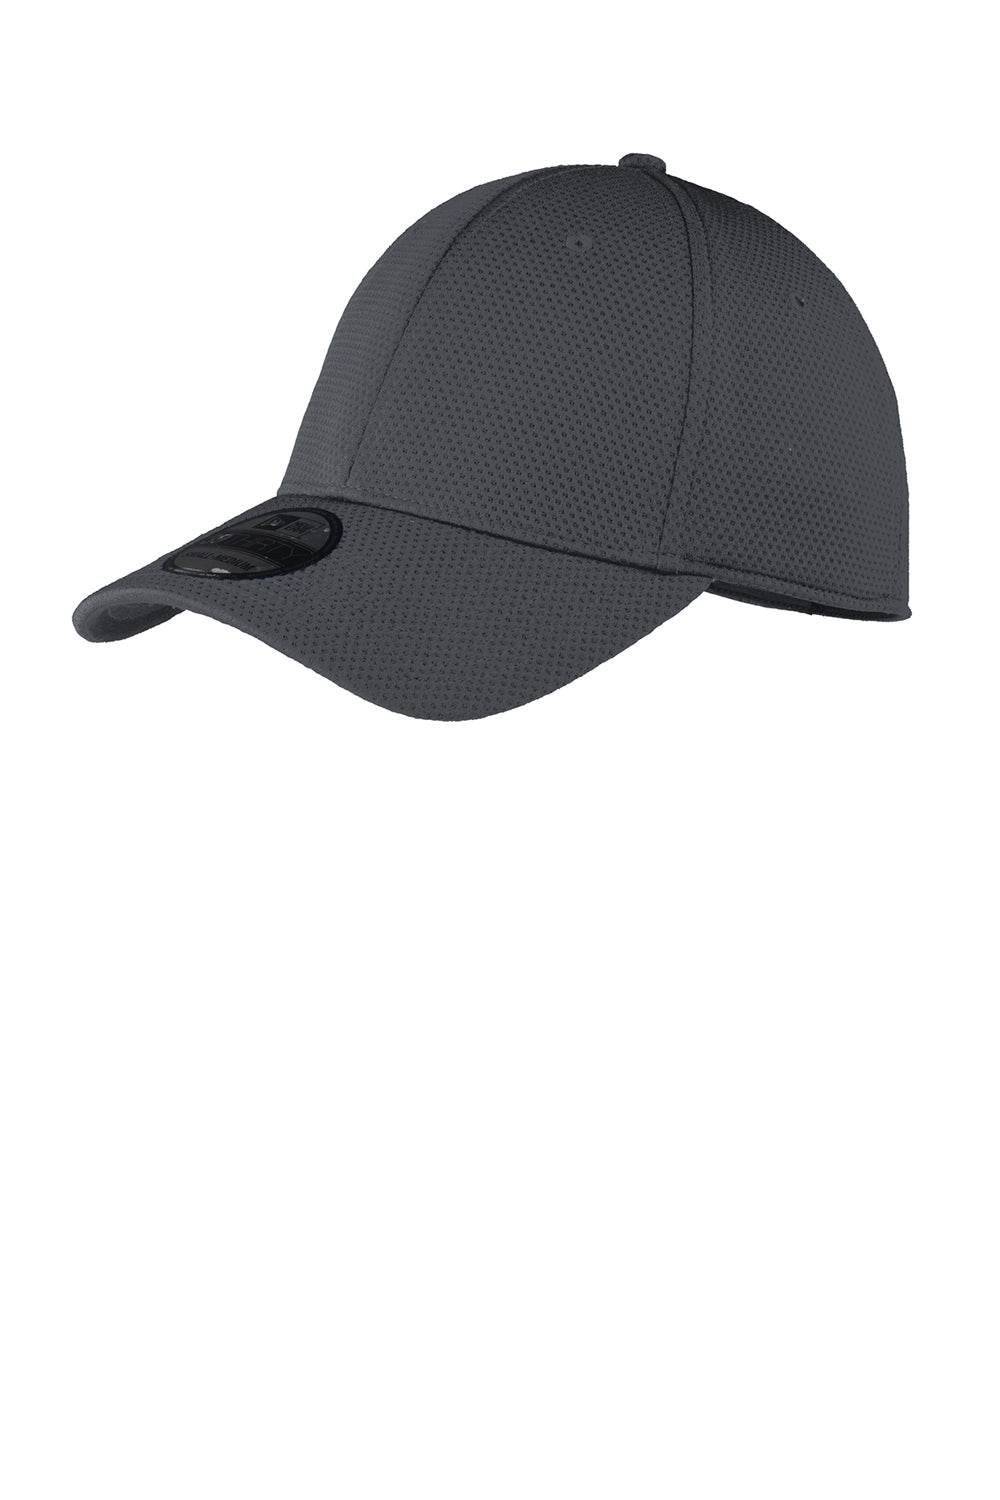 New Era NE1090 Mens Charcoal Grey Moisture Wicking Stretch Fit Hat